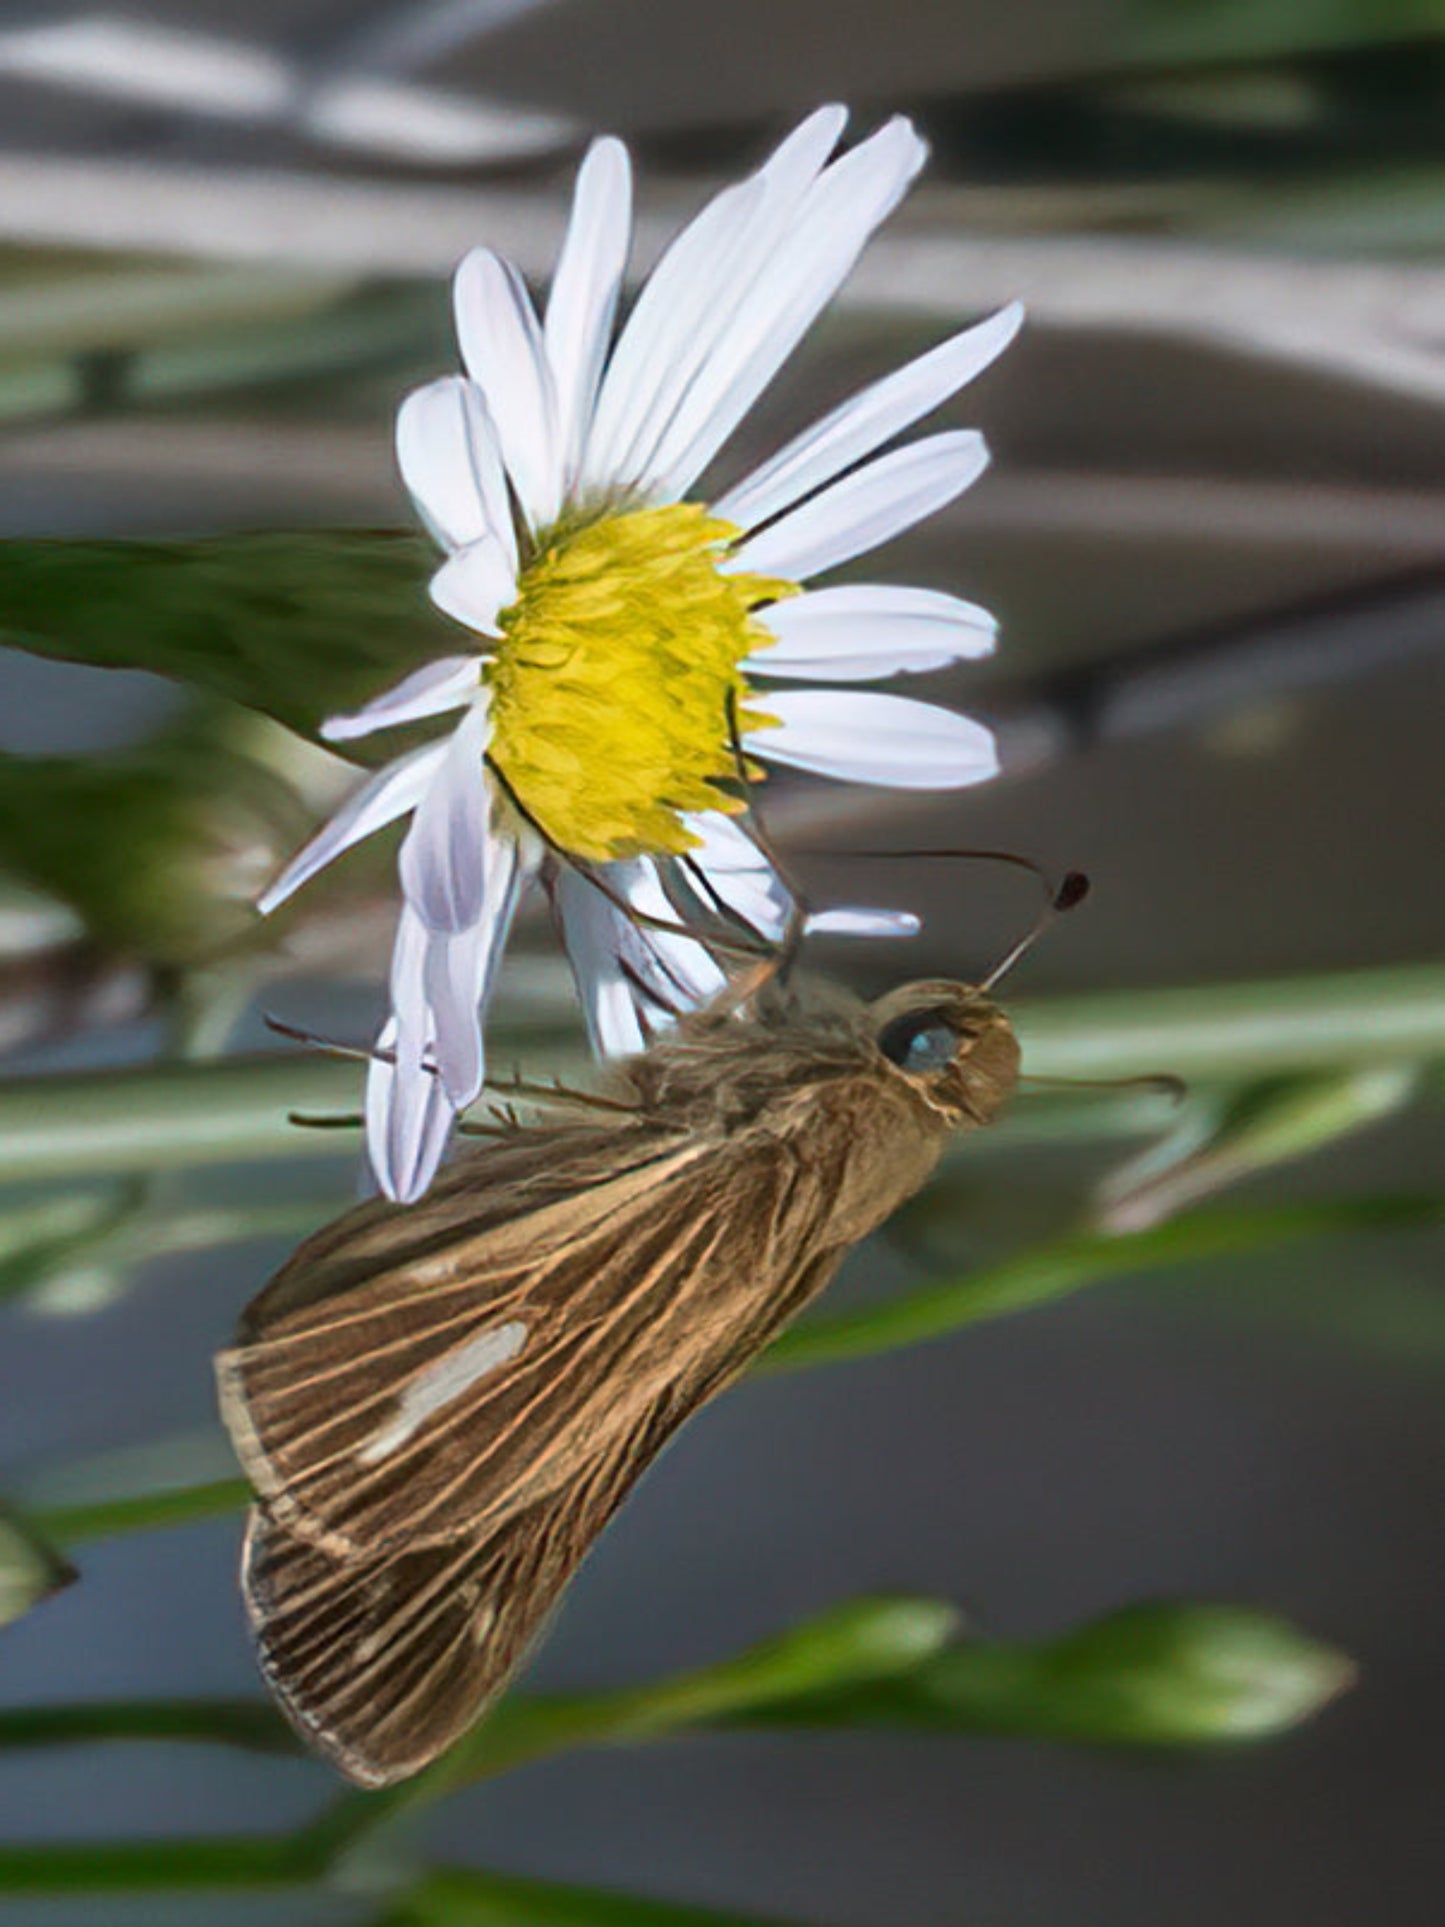 salt marsh skipper butterfly uses big cordgrass as host plant